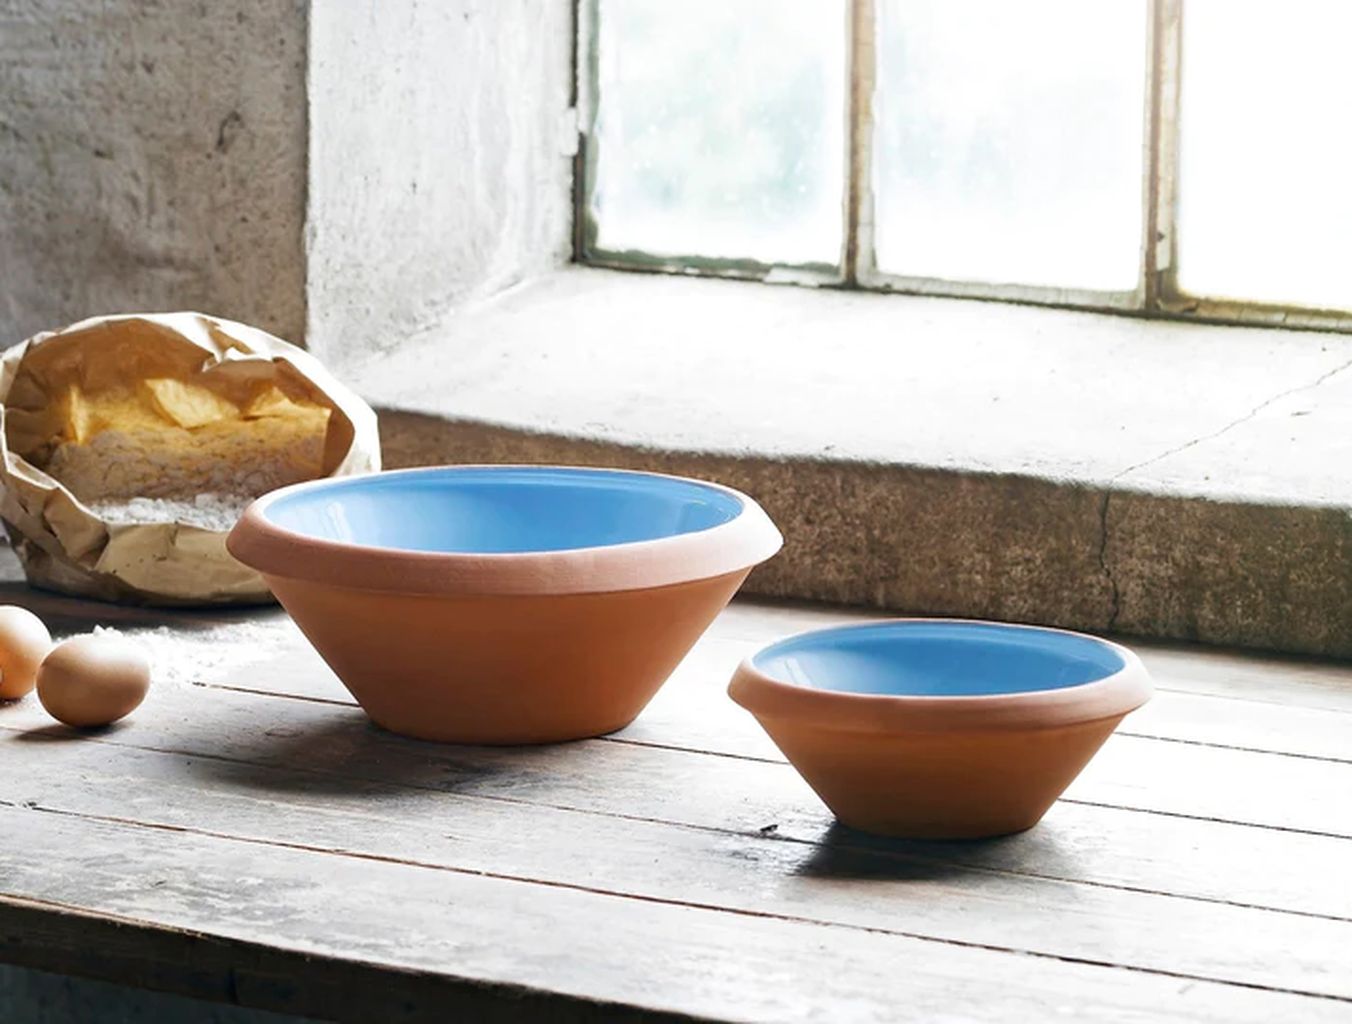 Knabstrup Keramik Dough Bowl 2 L, Light Blue